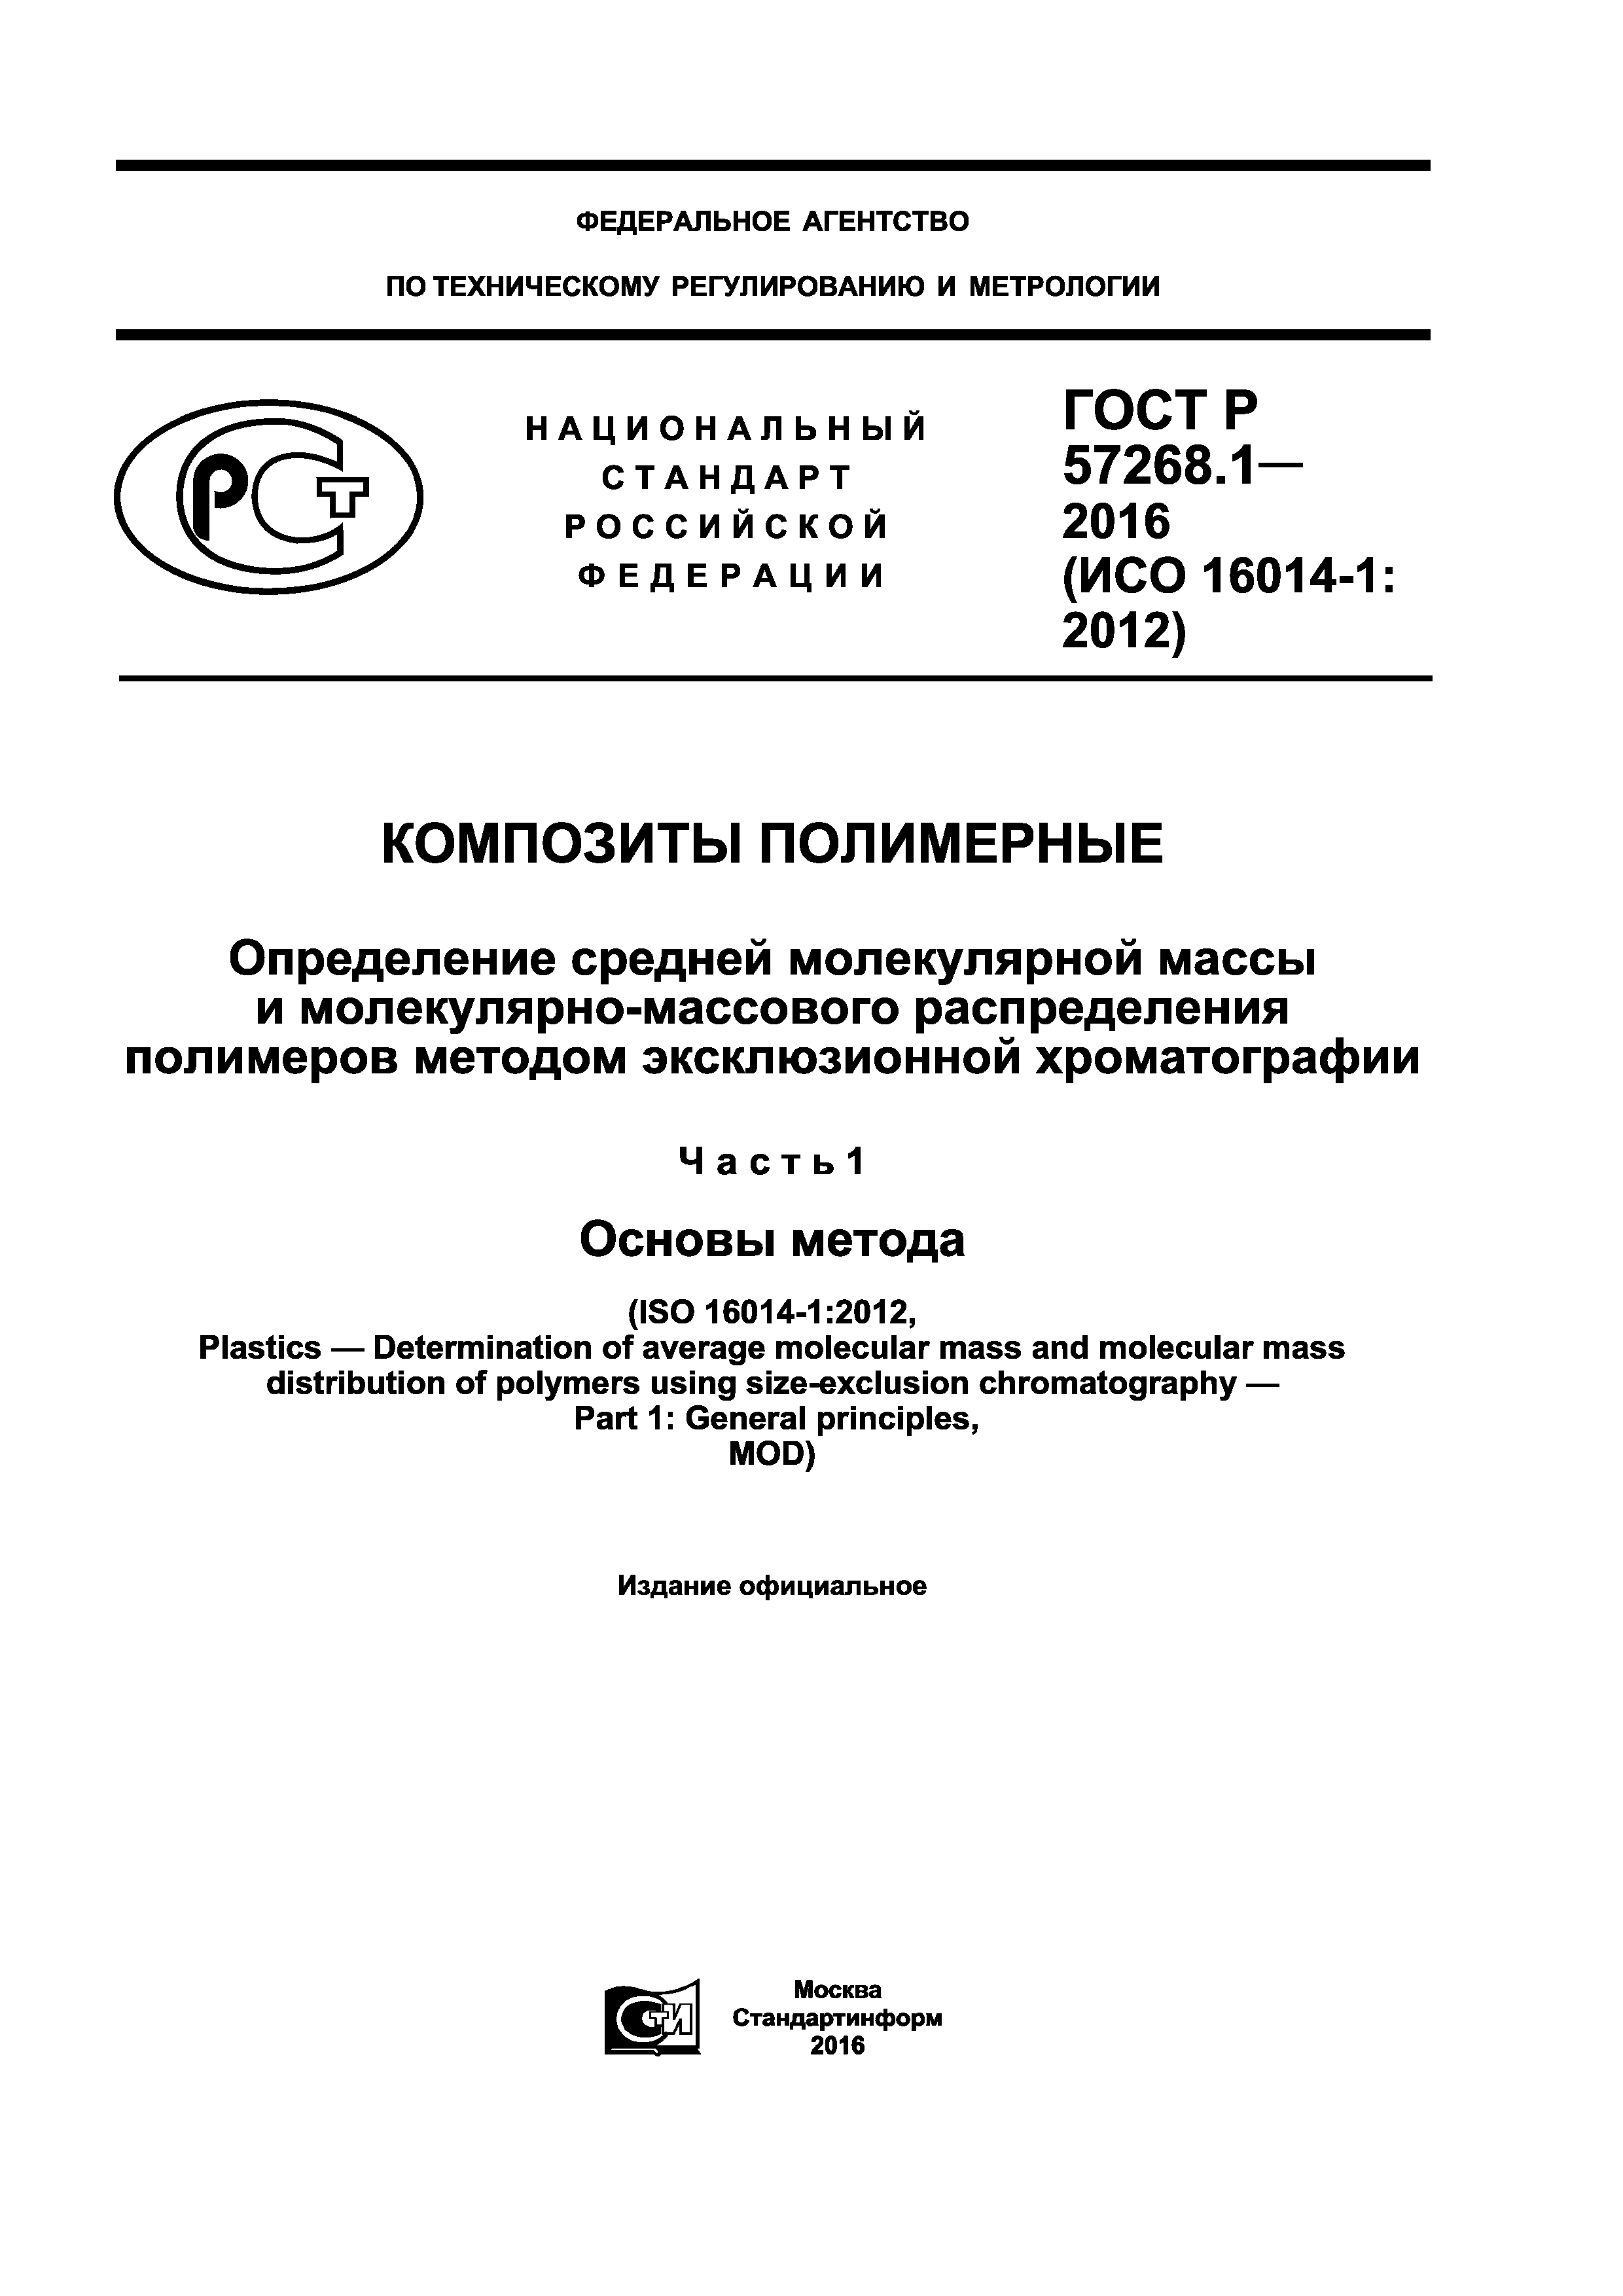 ГОСТ Р 57268.1-2016